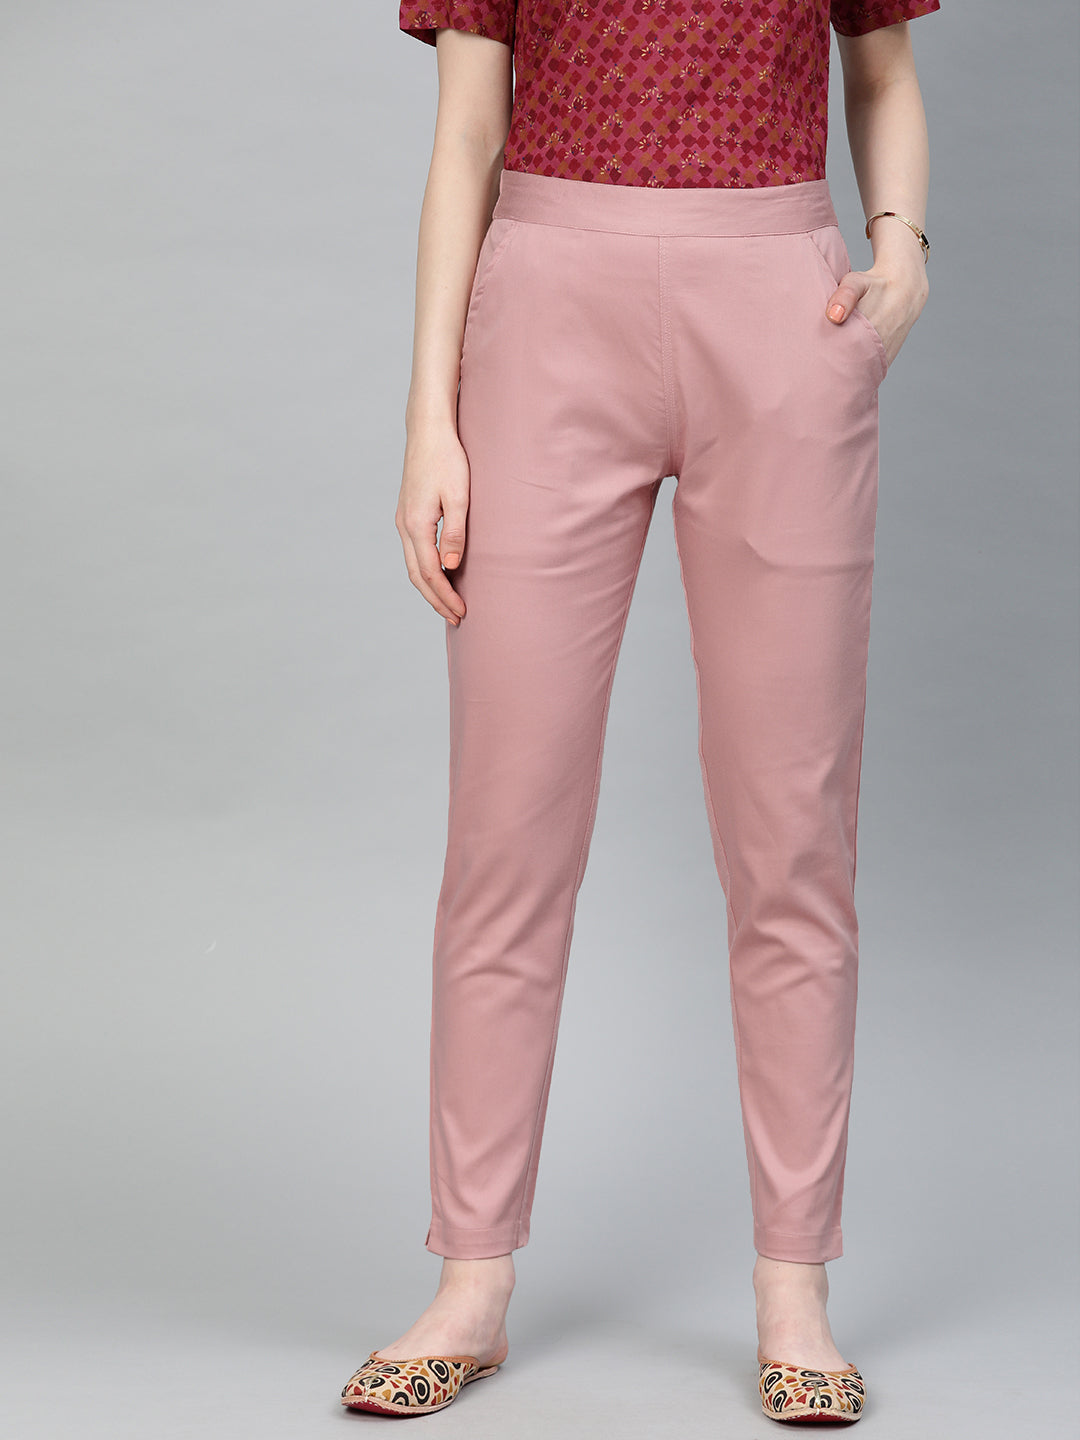 Shop Blush Pink Solid Cotton Lycra Pant